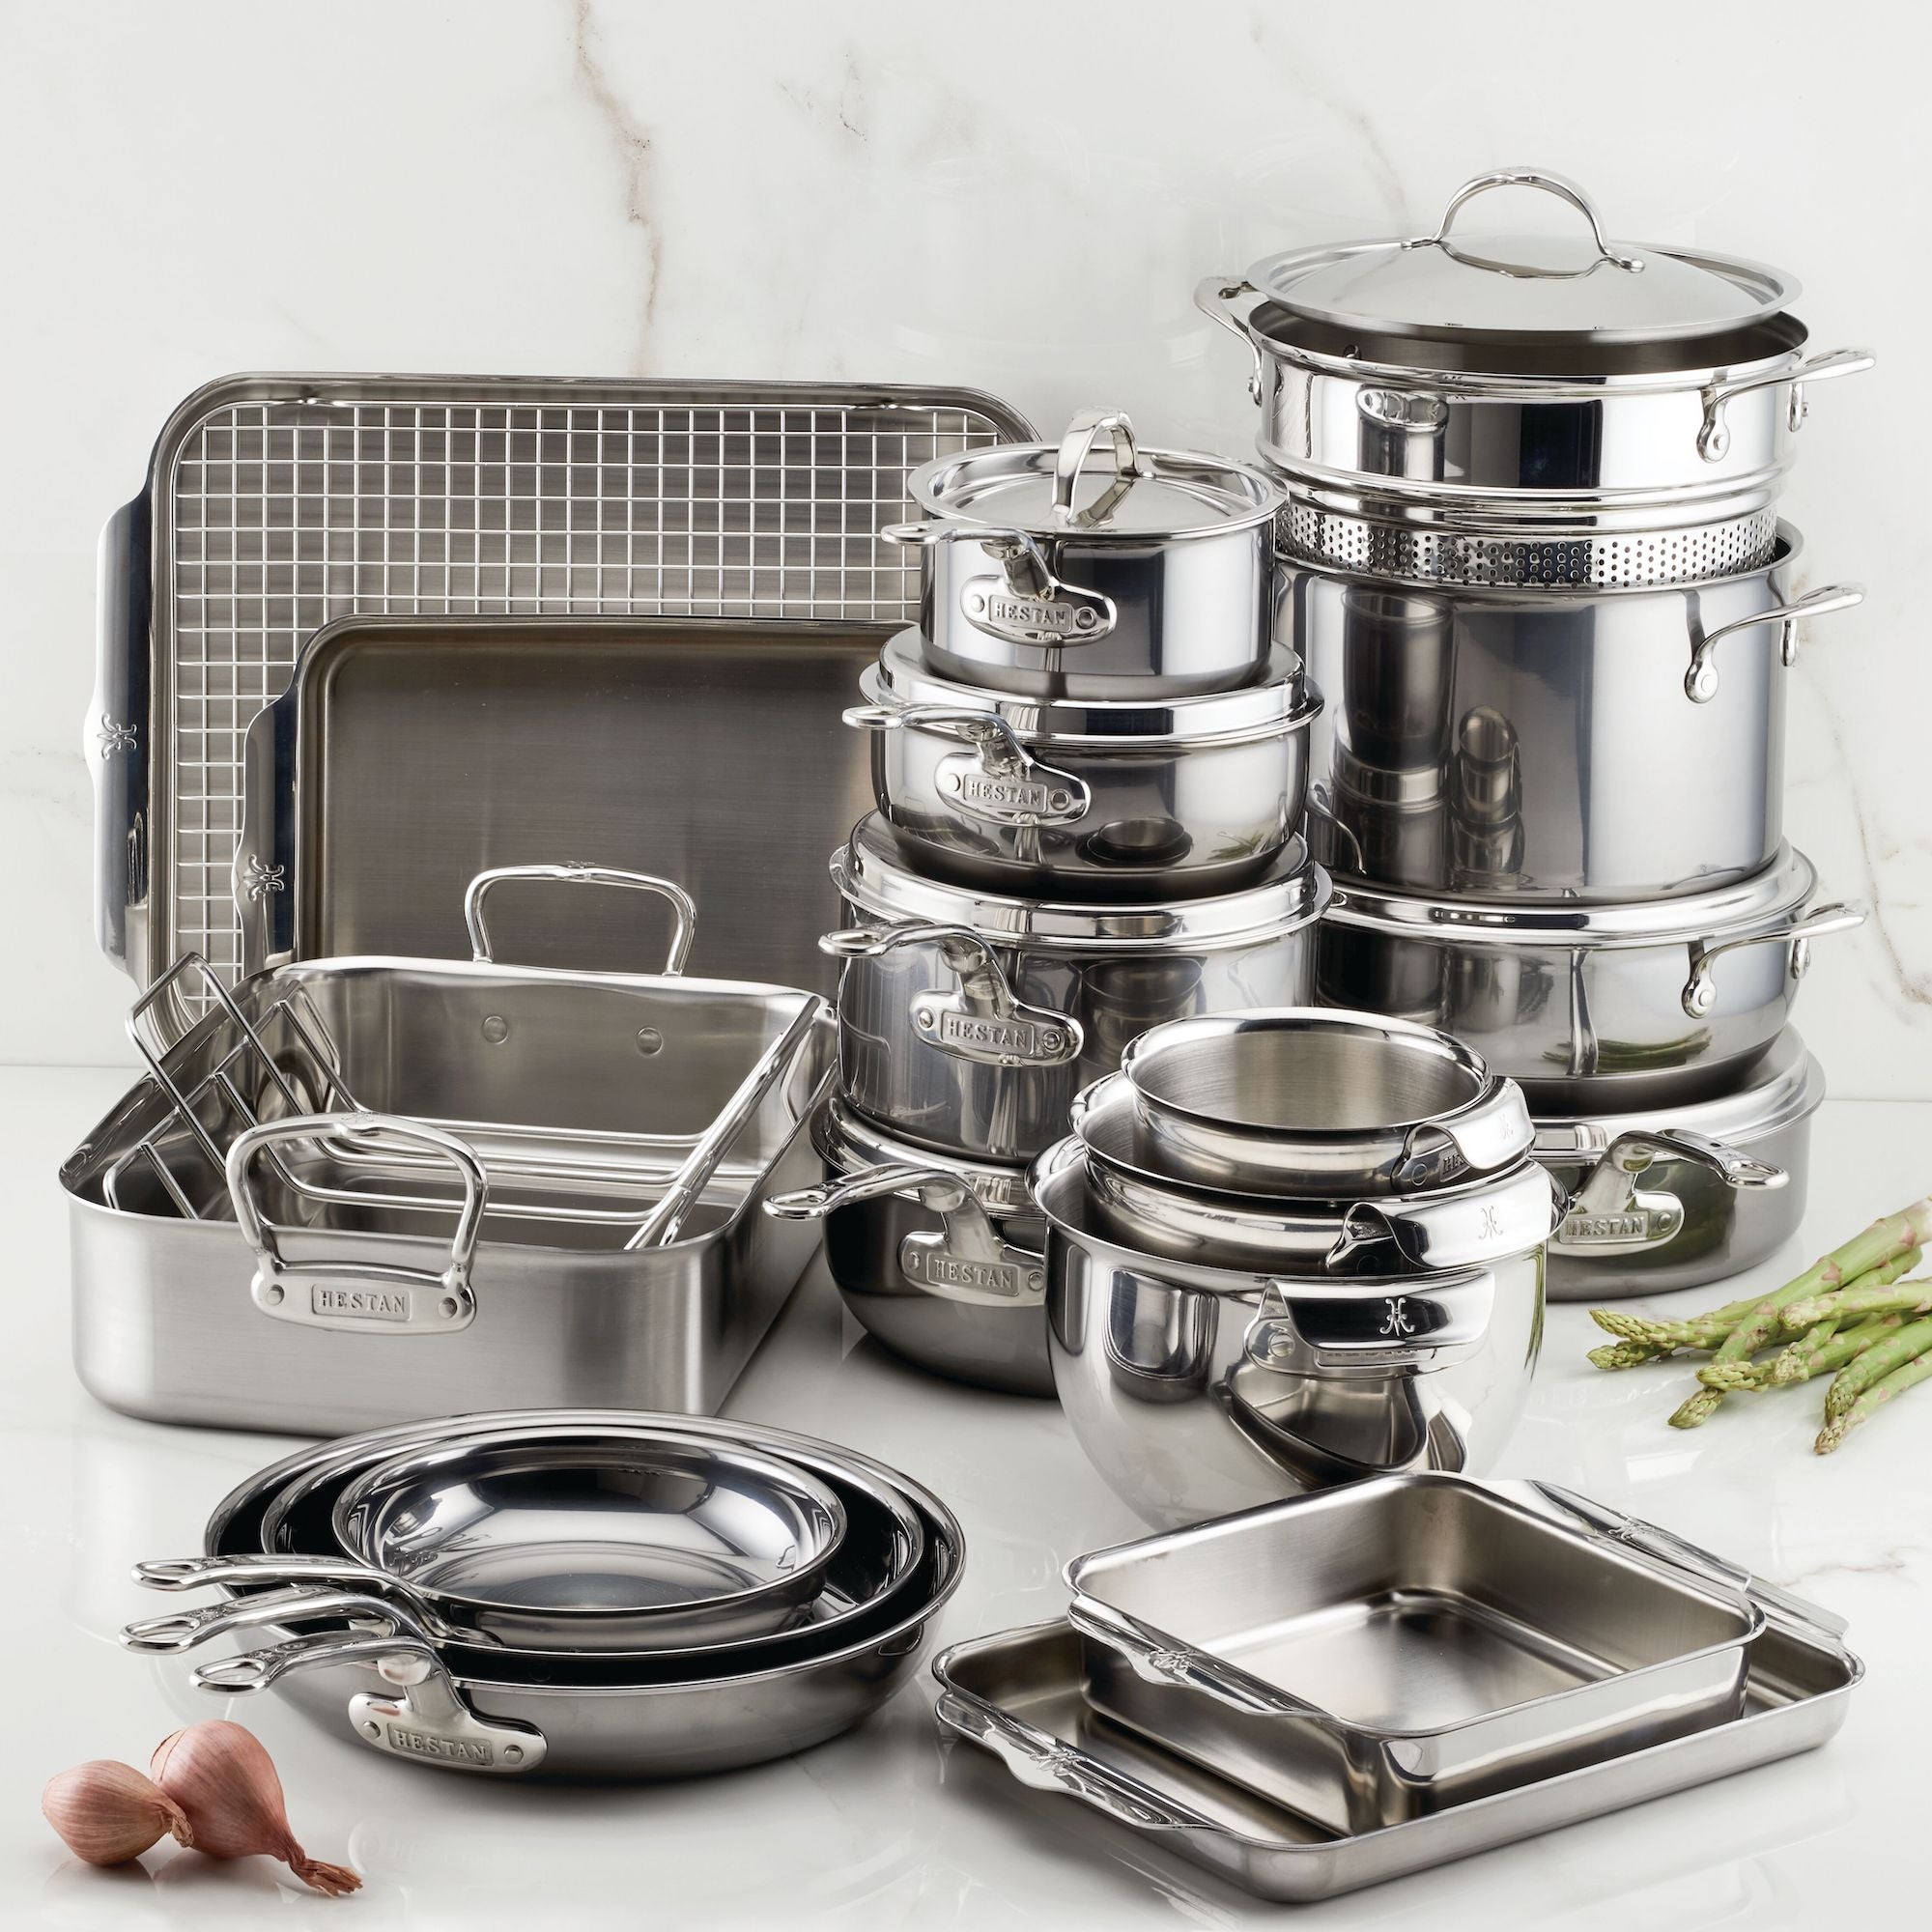 Choice 5-Piece Aluminum Cookware Set with 2.75 Qt. Sauce Pan, 3.75 Qt.  Sauce Pan, 8 Qt. Stock Pot with Cover, and 10 Fry Pan